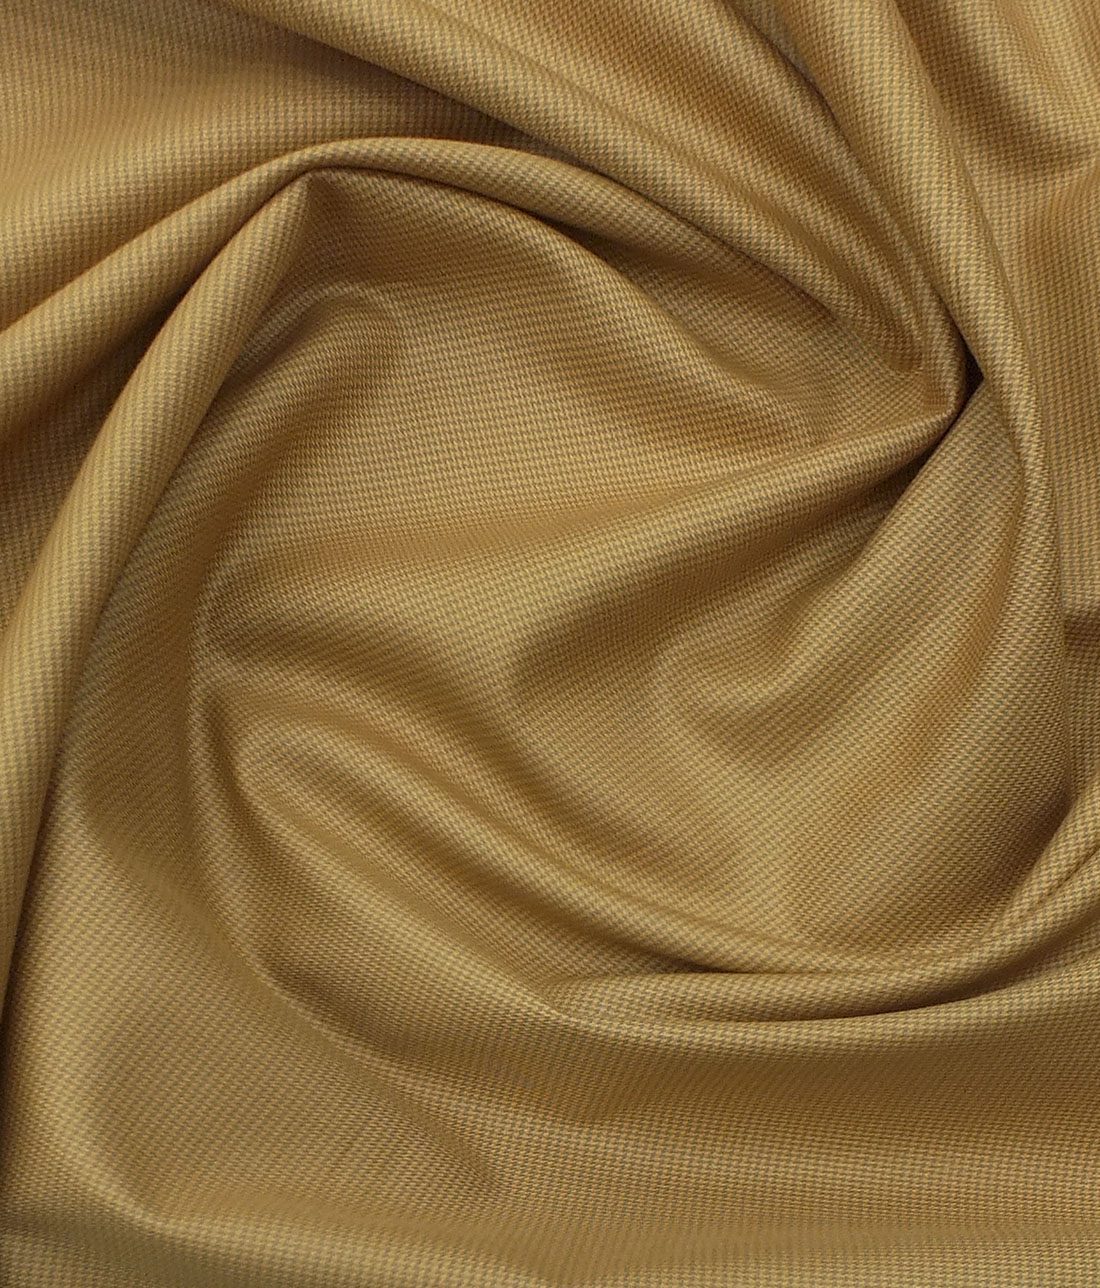 Bombay Rayon Men's Mustard Yellow Giza Cotton Satin Weave Shirt Fabric